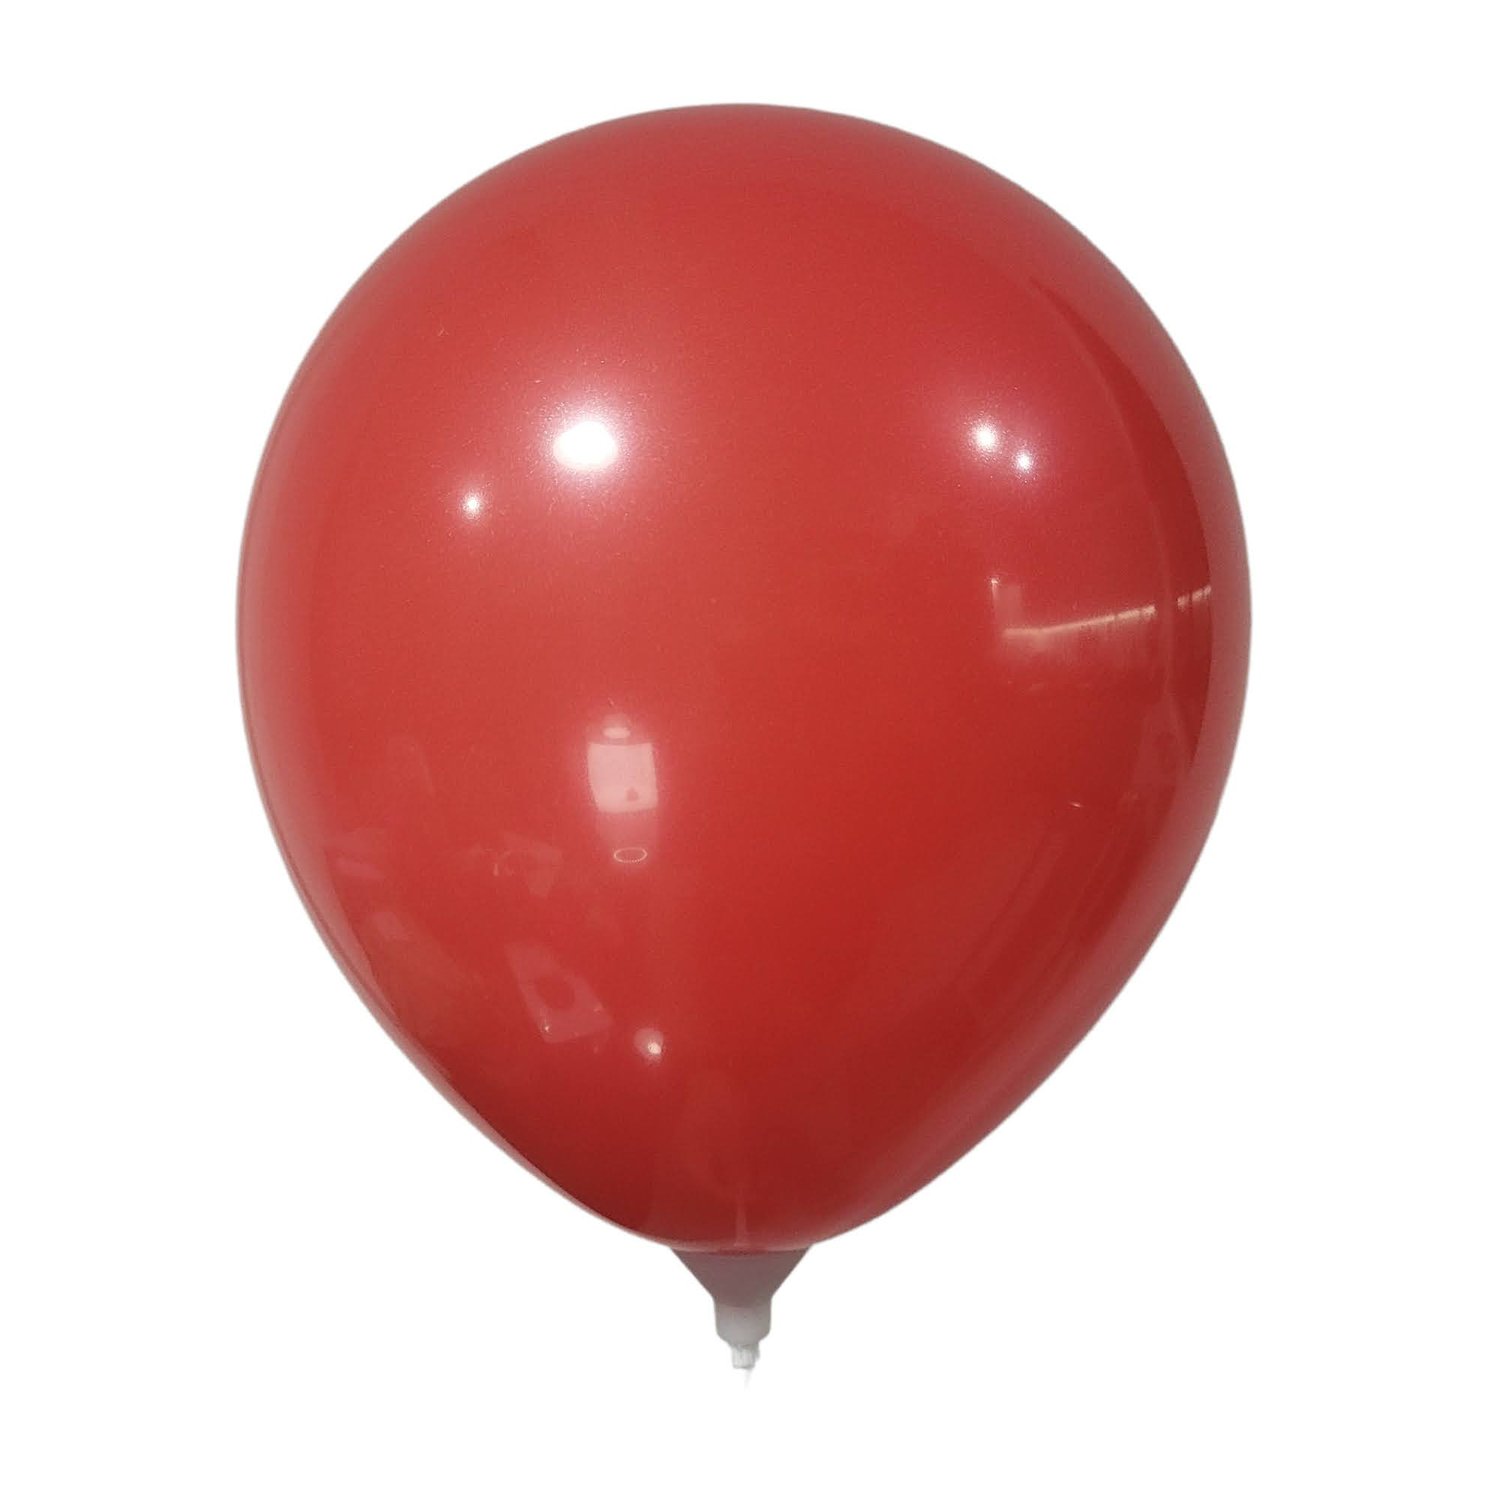 Balão de látex 5 polegadas Metálico Ouro - 25 unidades – Joy - Fescopan